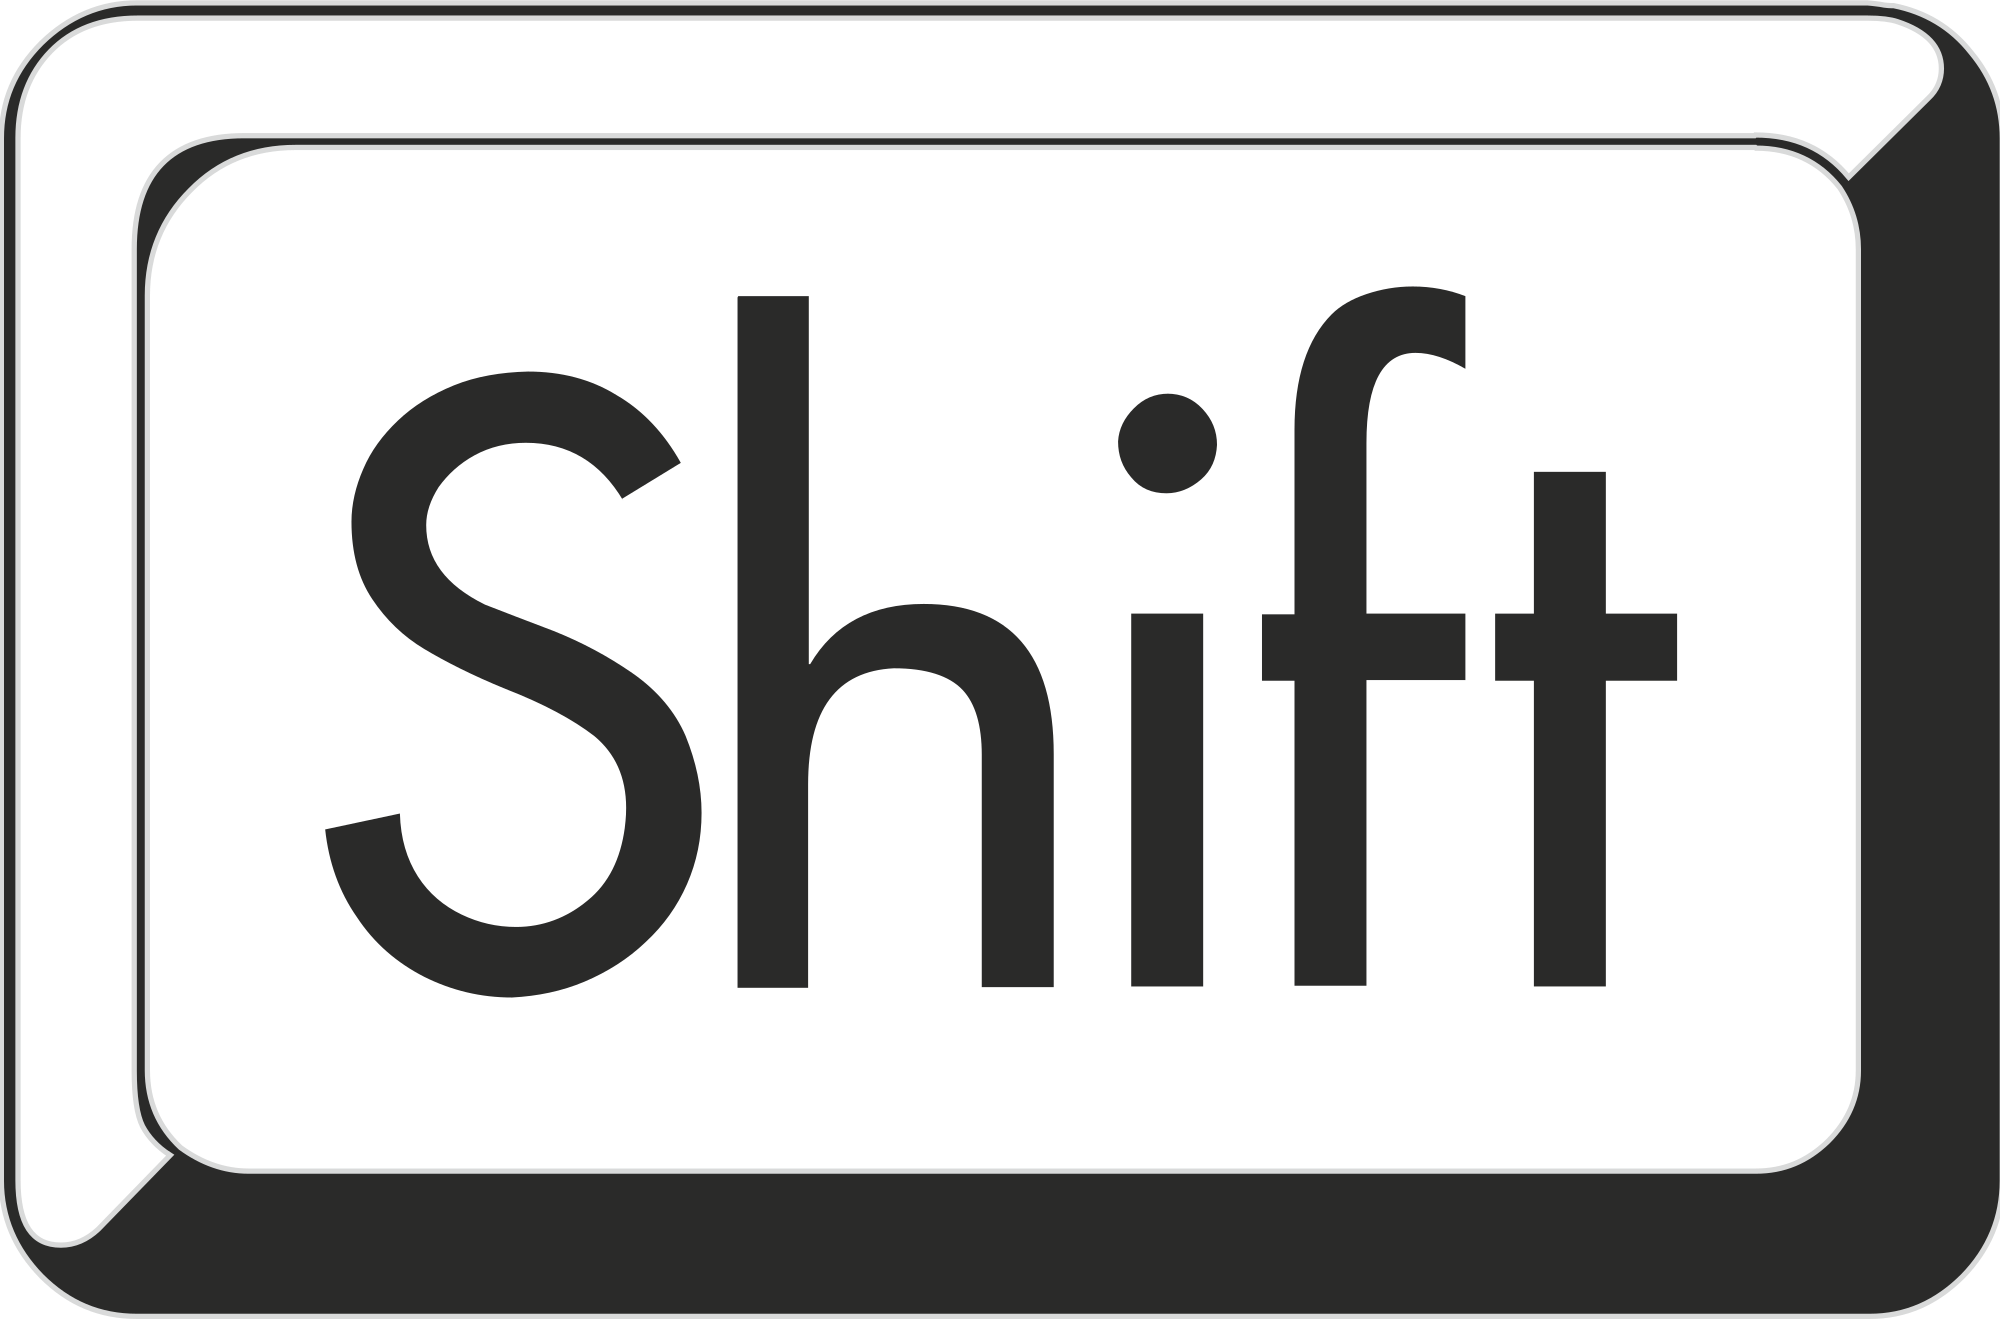 Shift svg #14, Download drawings